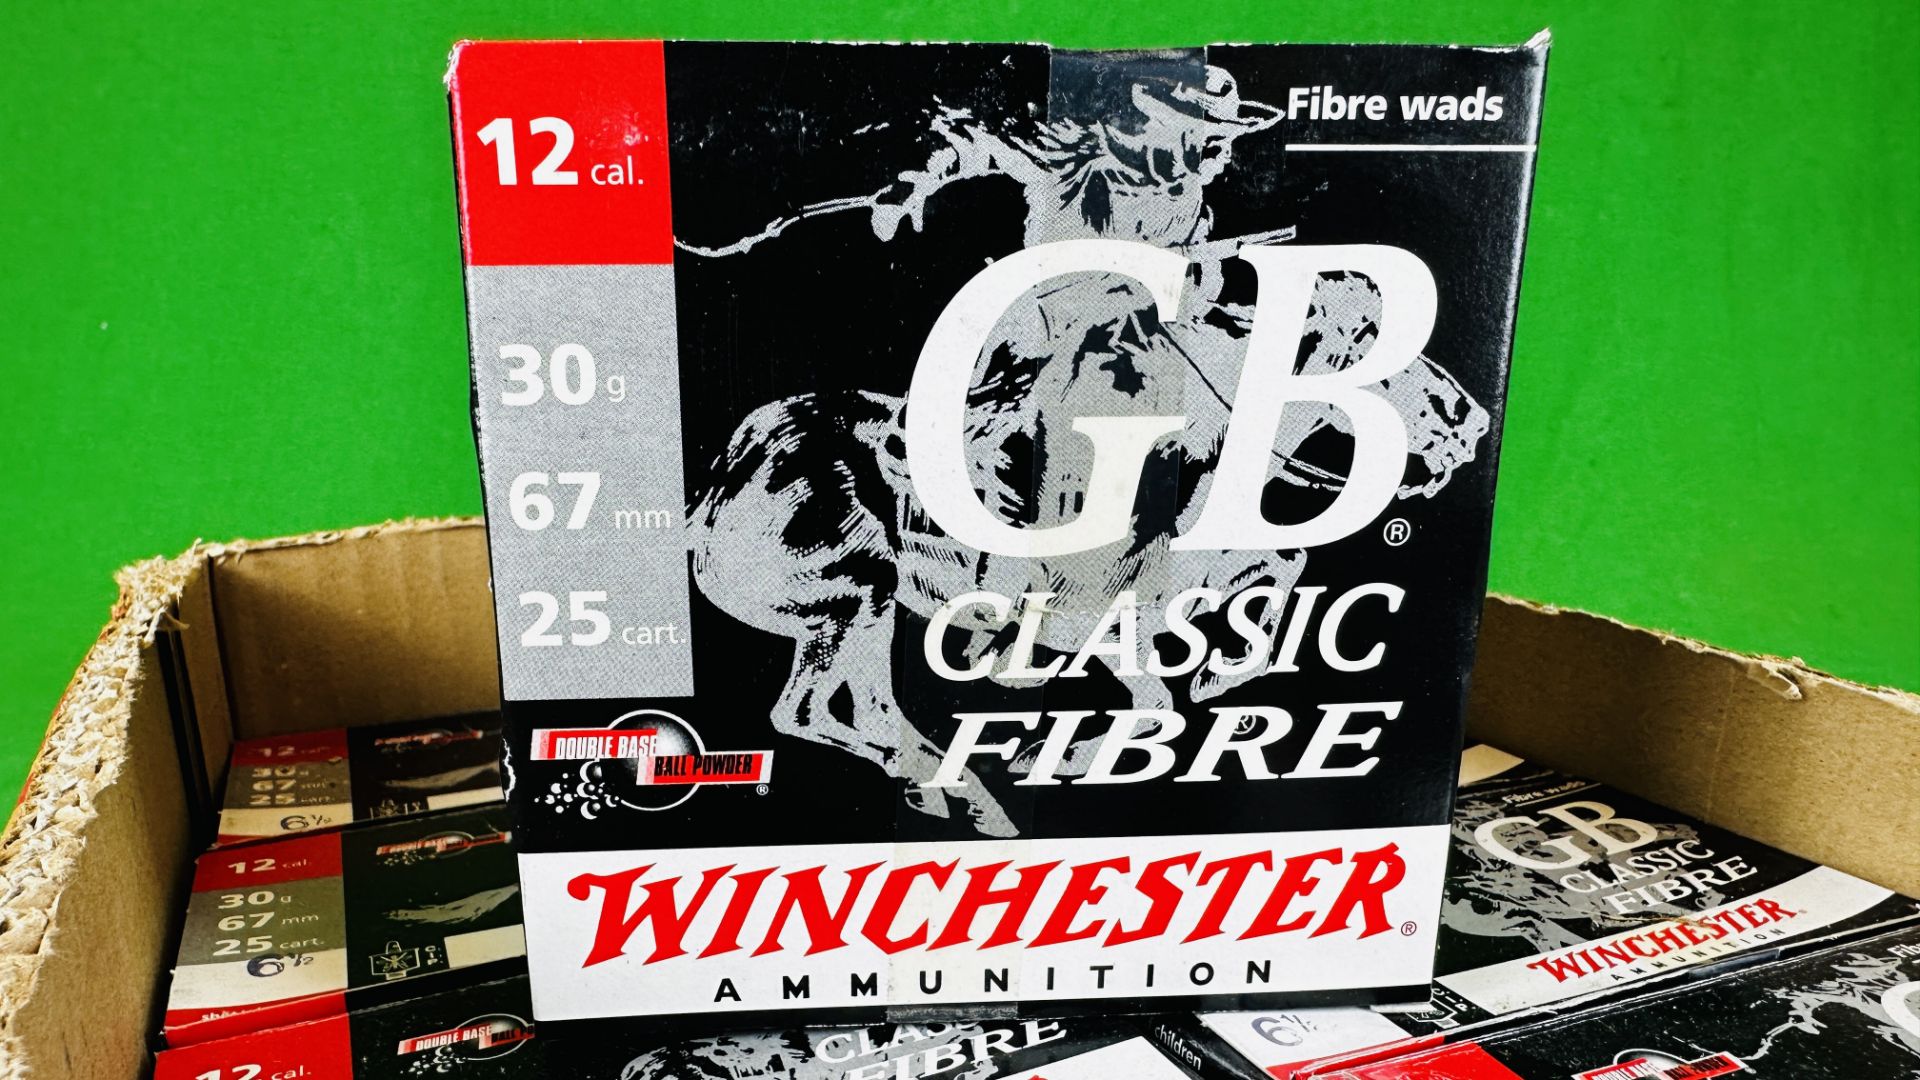 250 WINCHESTER GB CLASSIC FIBRE 12 GAUGE 6. - Image 2 of 4